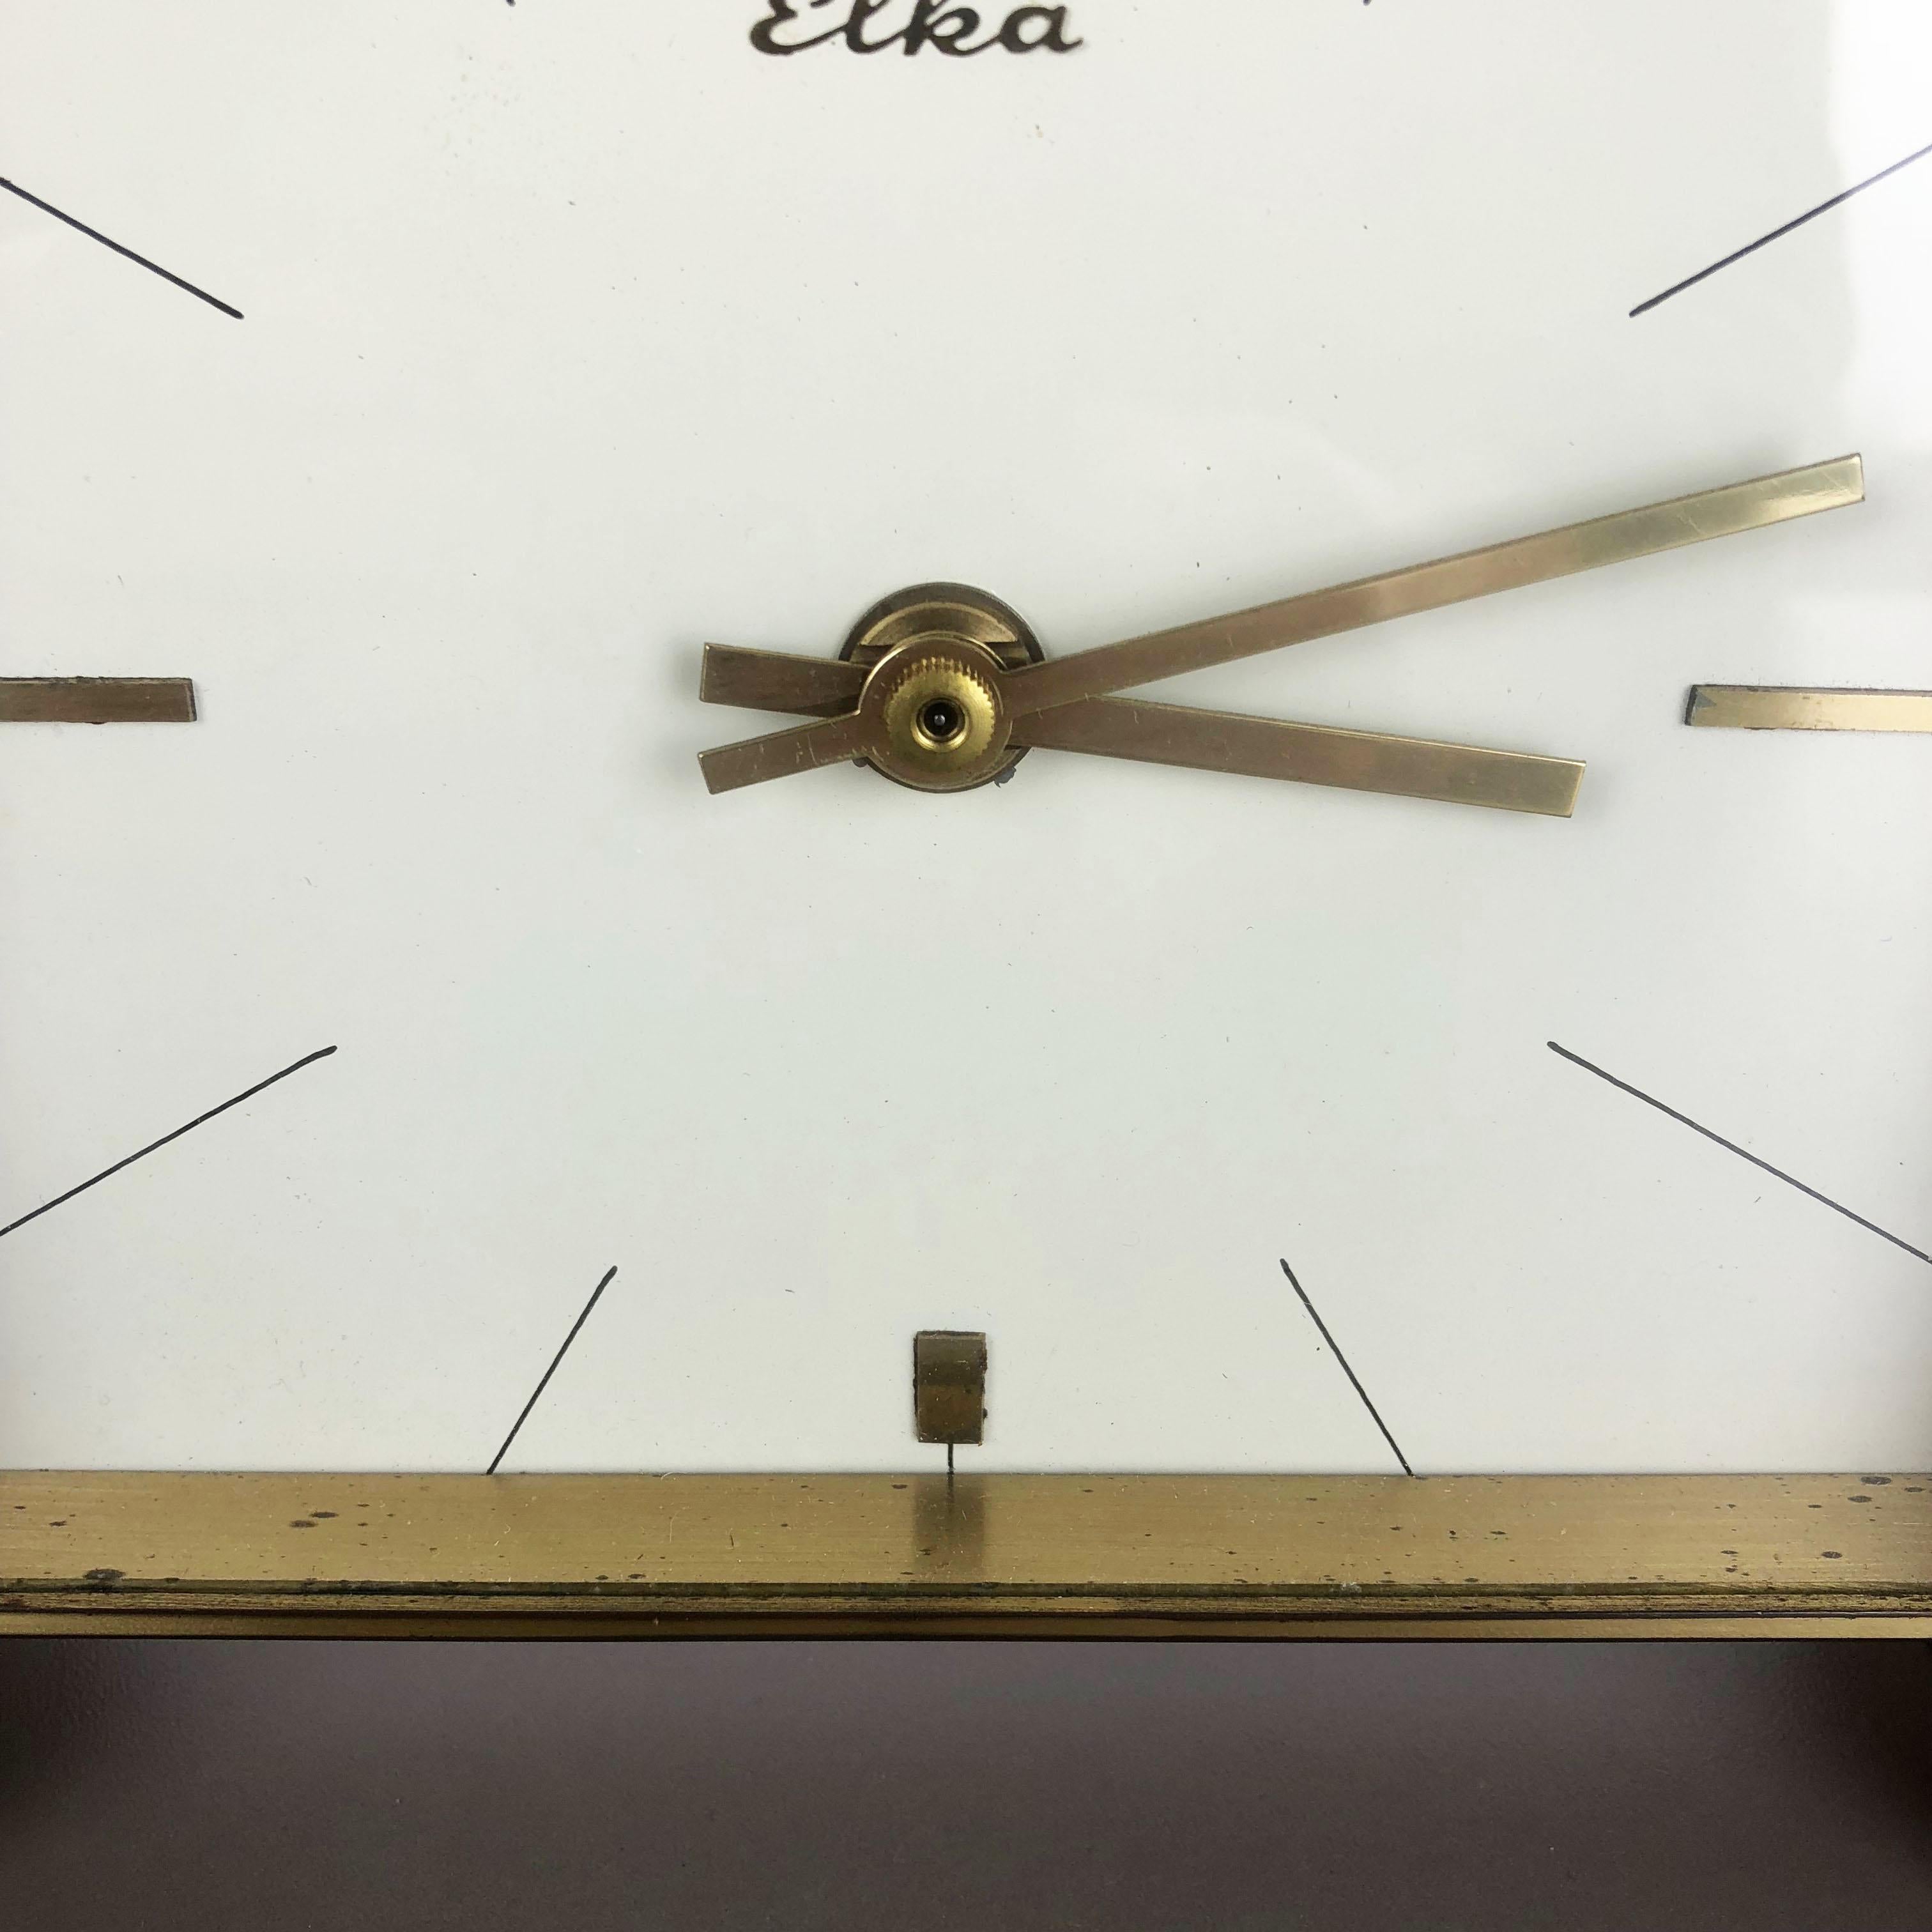 Vintage 1960s Modernist Wooden Teak and Brass Table Clock by Elka, Germany 1